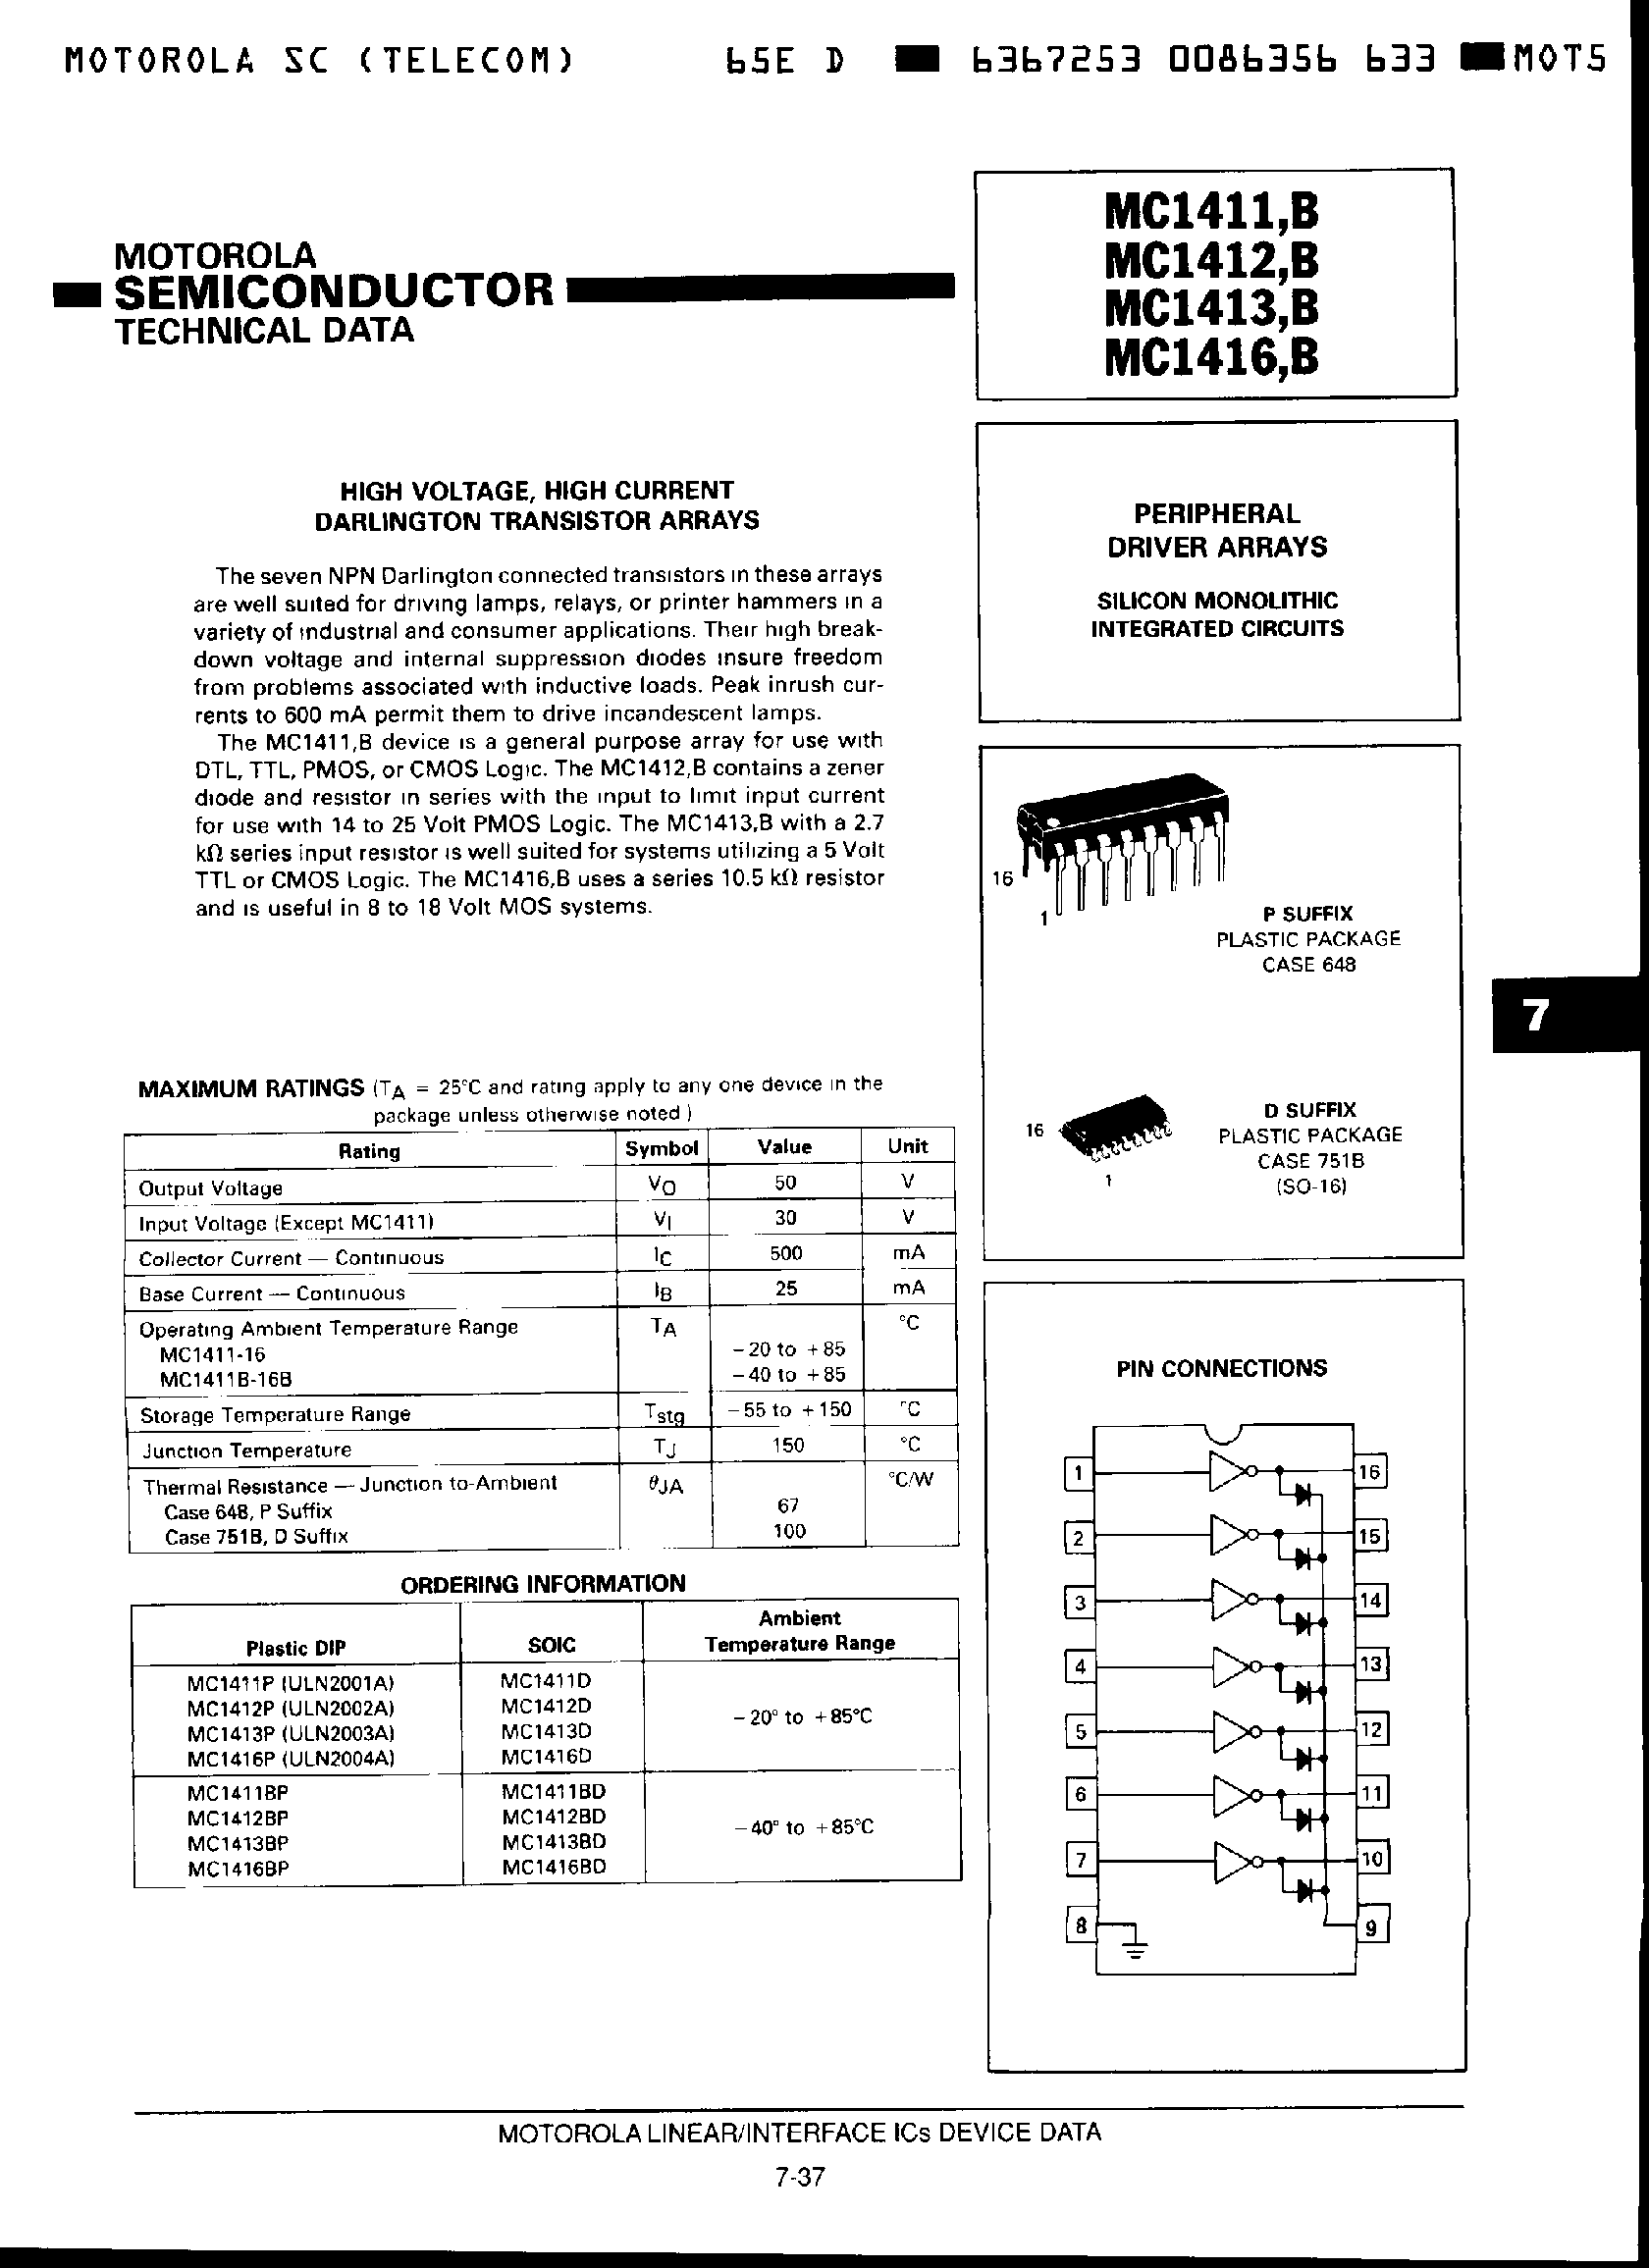 Datasheet MC1411D - PERIPHERAL DRIVER ARRAYS page 1